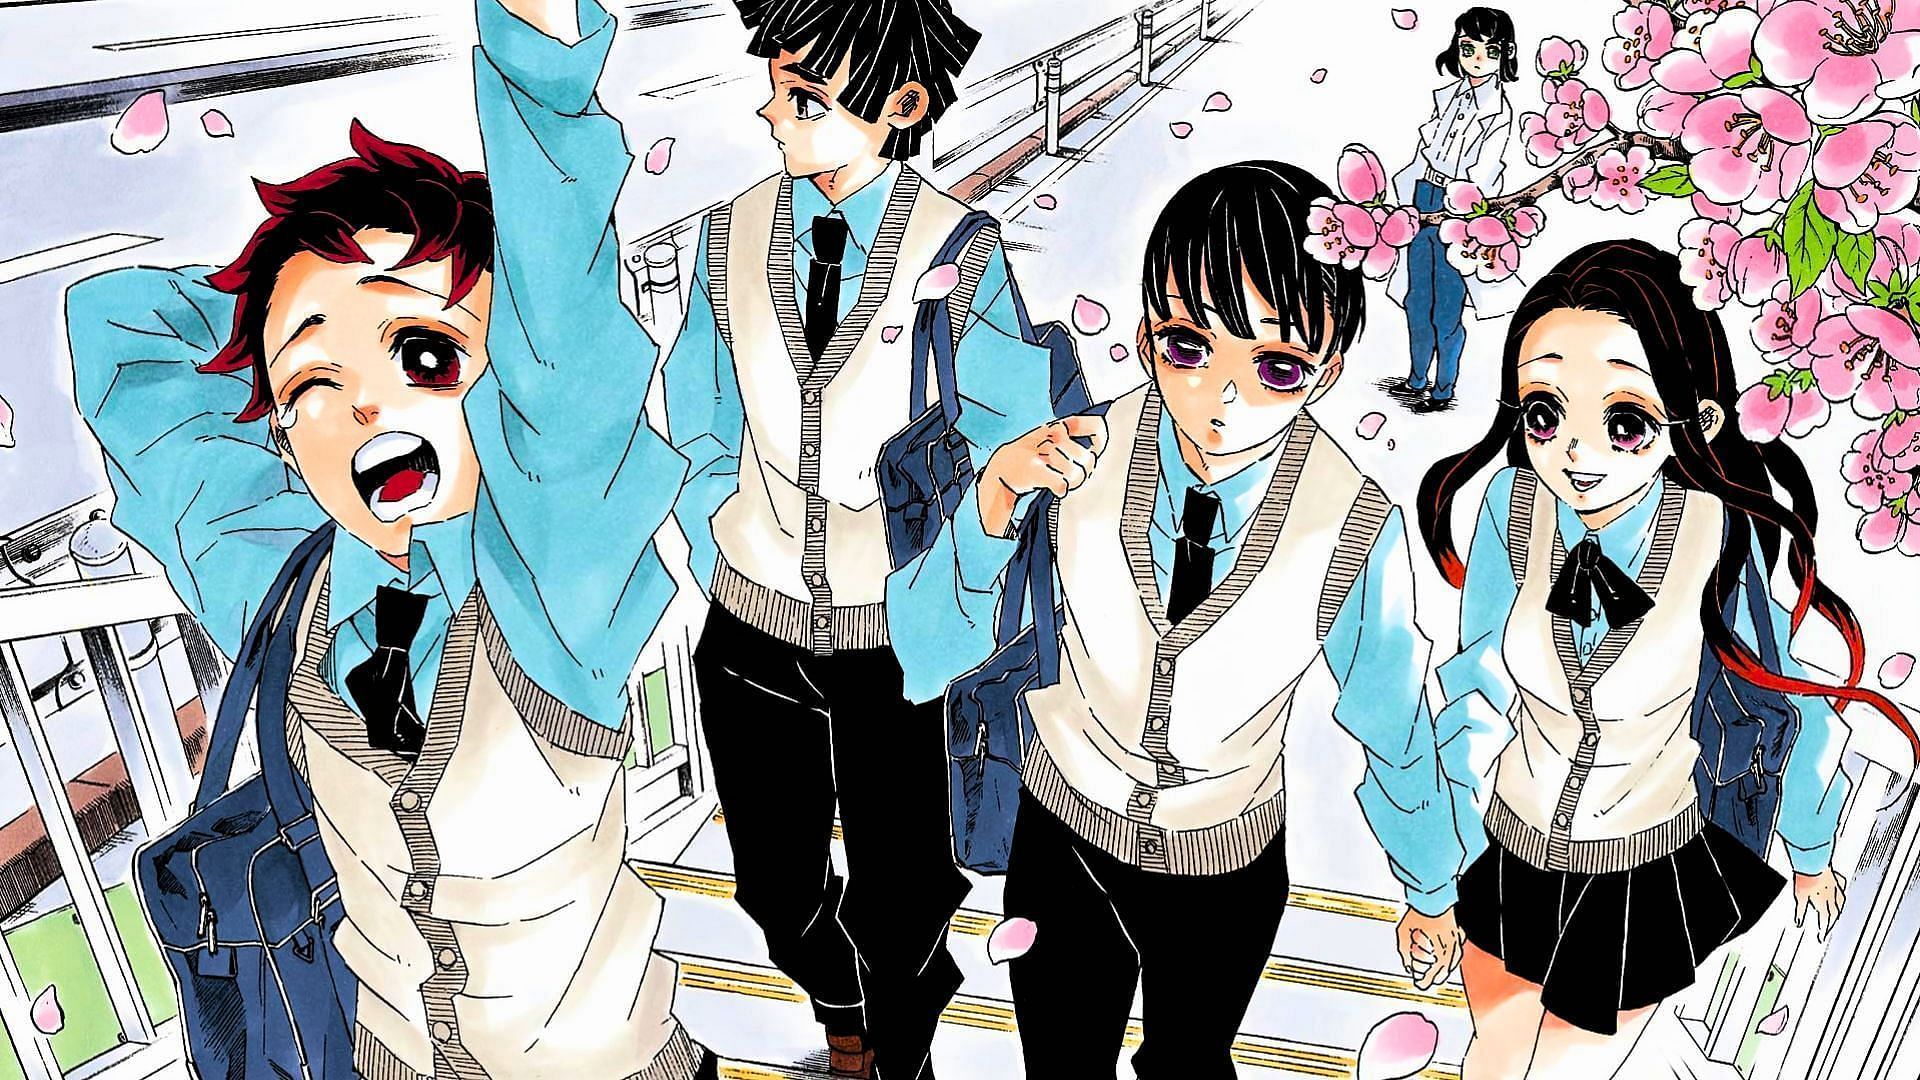 Toko Agatsuma( extreme right), In the ending of Demon Slayer manga (Image via Koyoharu Gotouge/Shueisha)